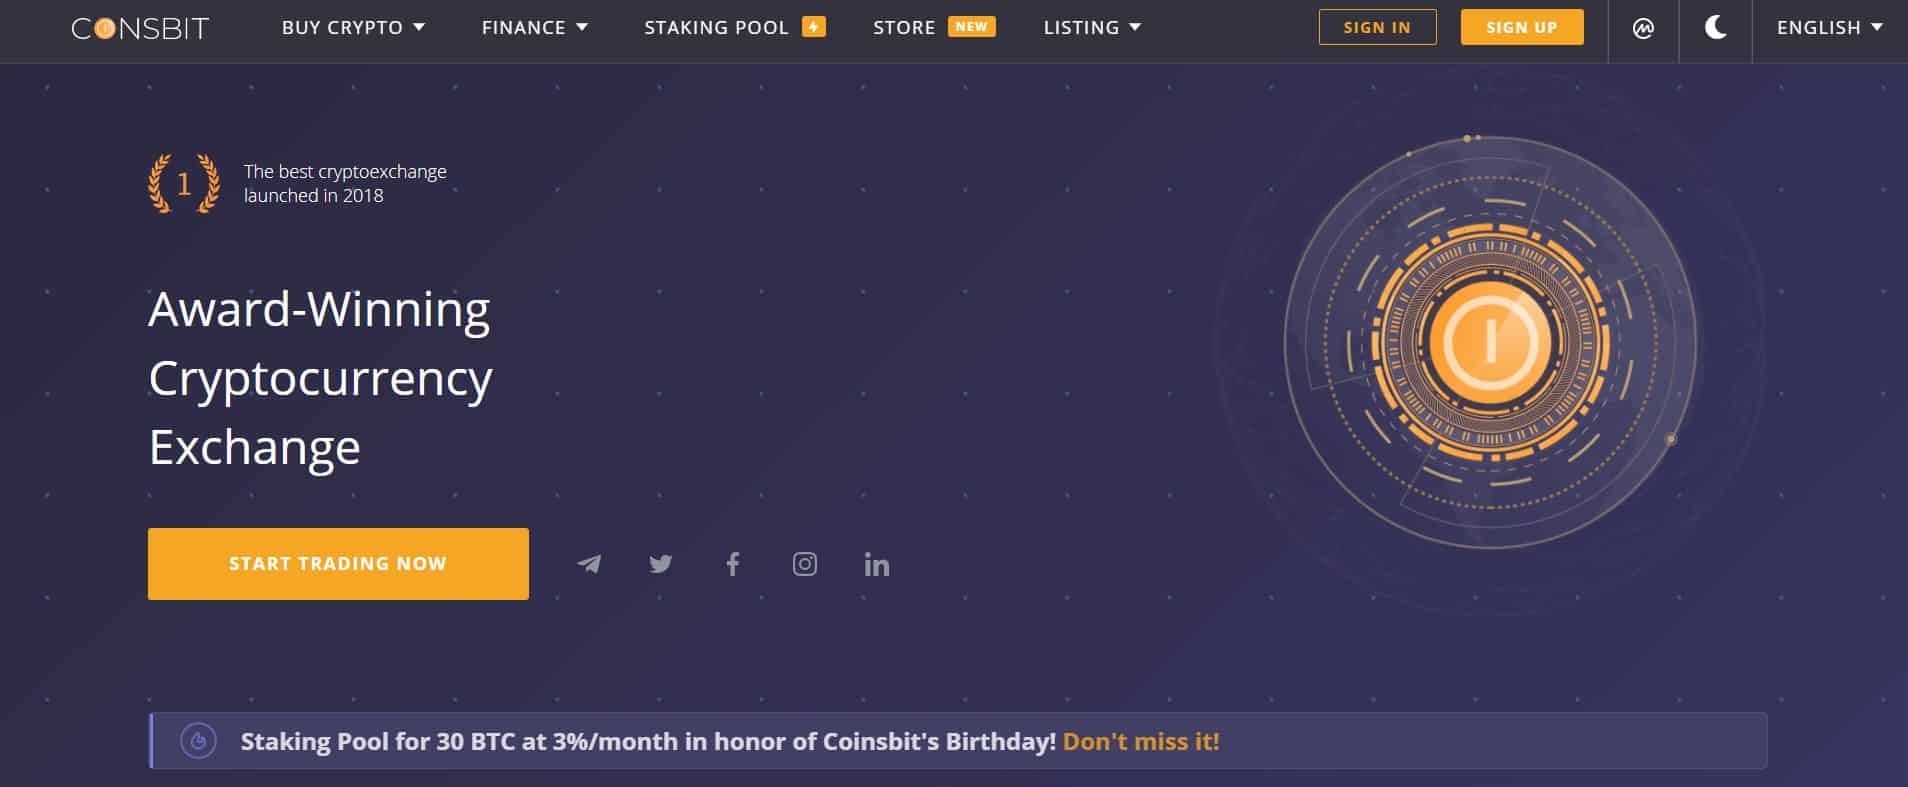 Coinsbit website